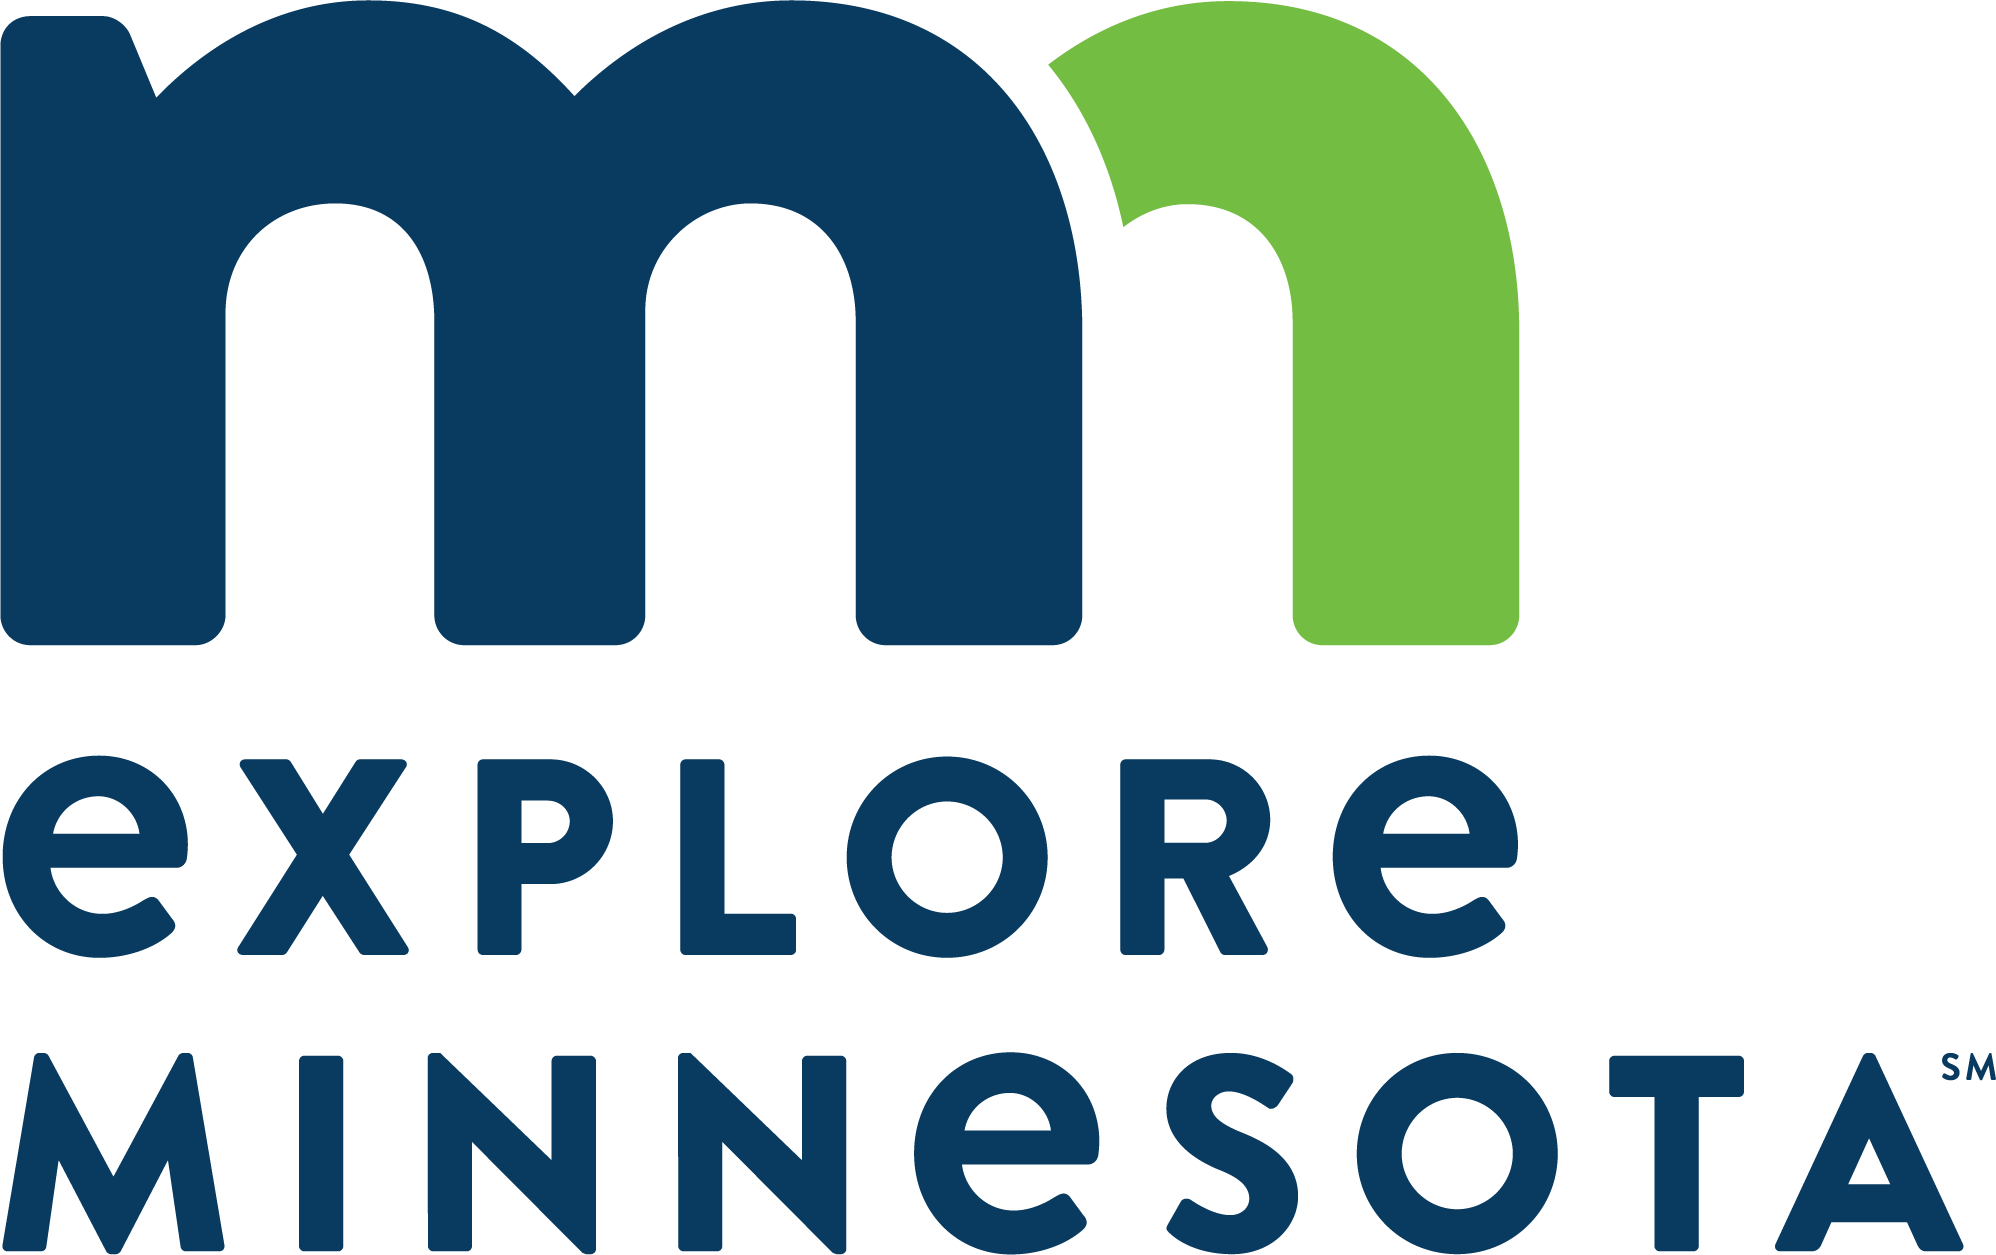 Explore Minnesota Logo